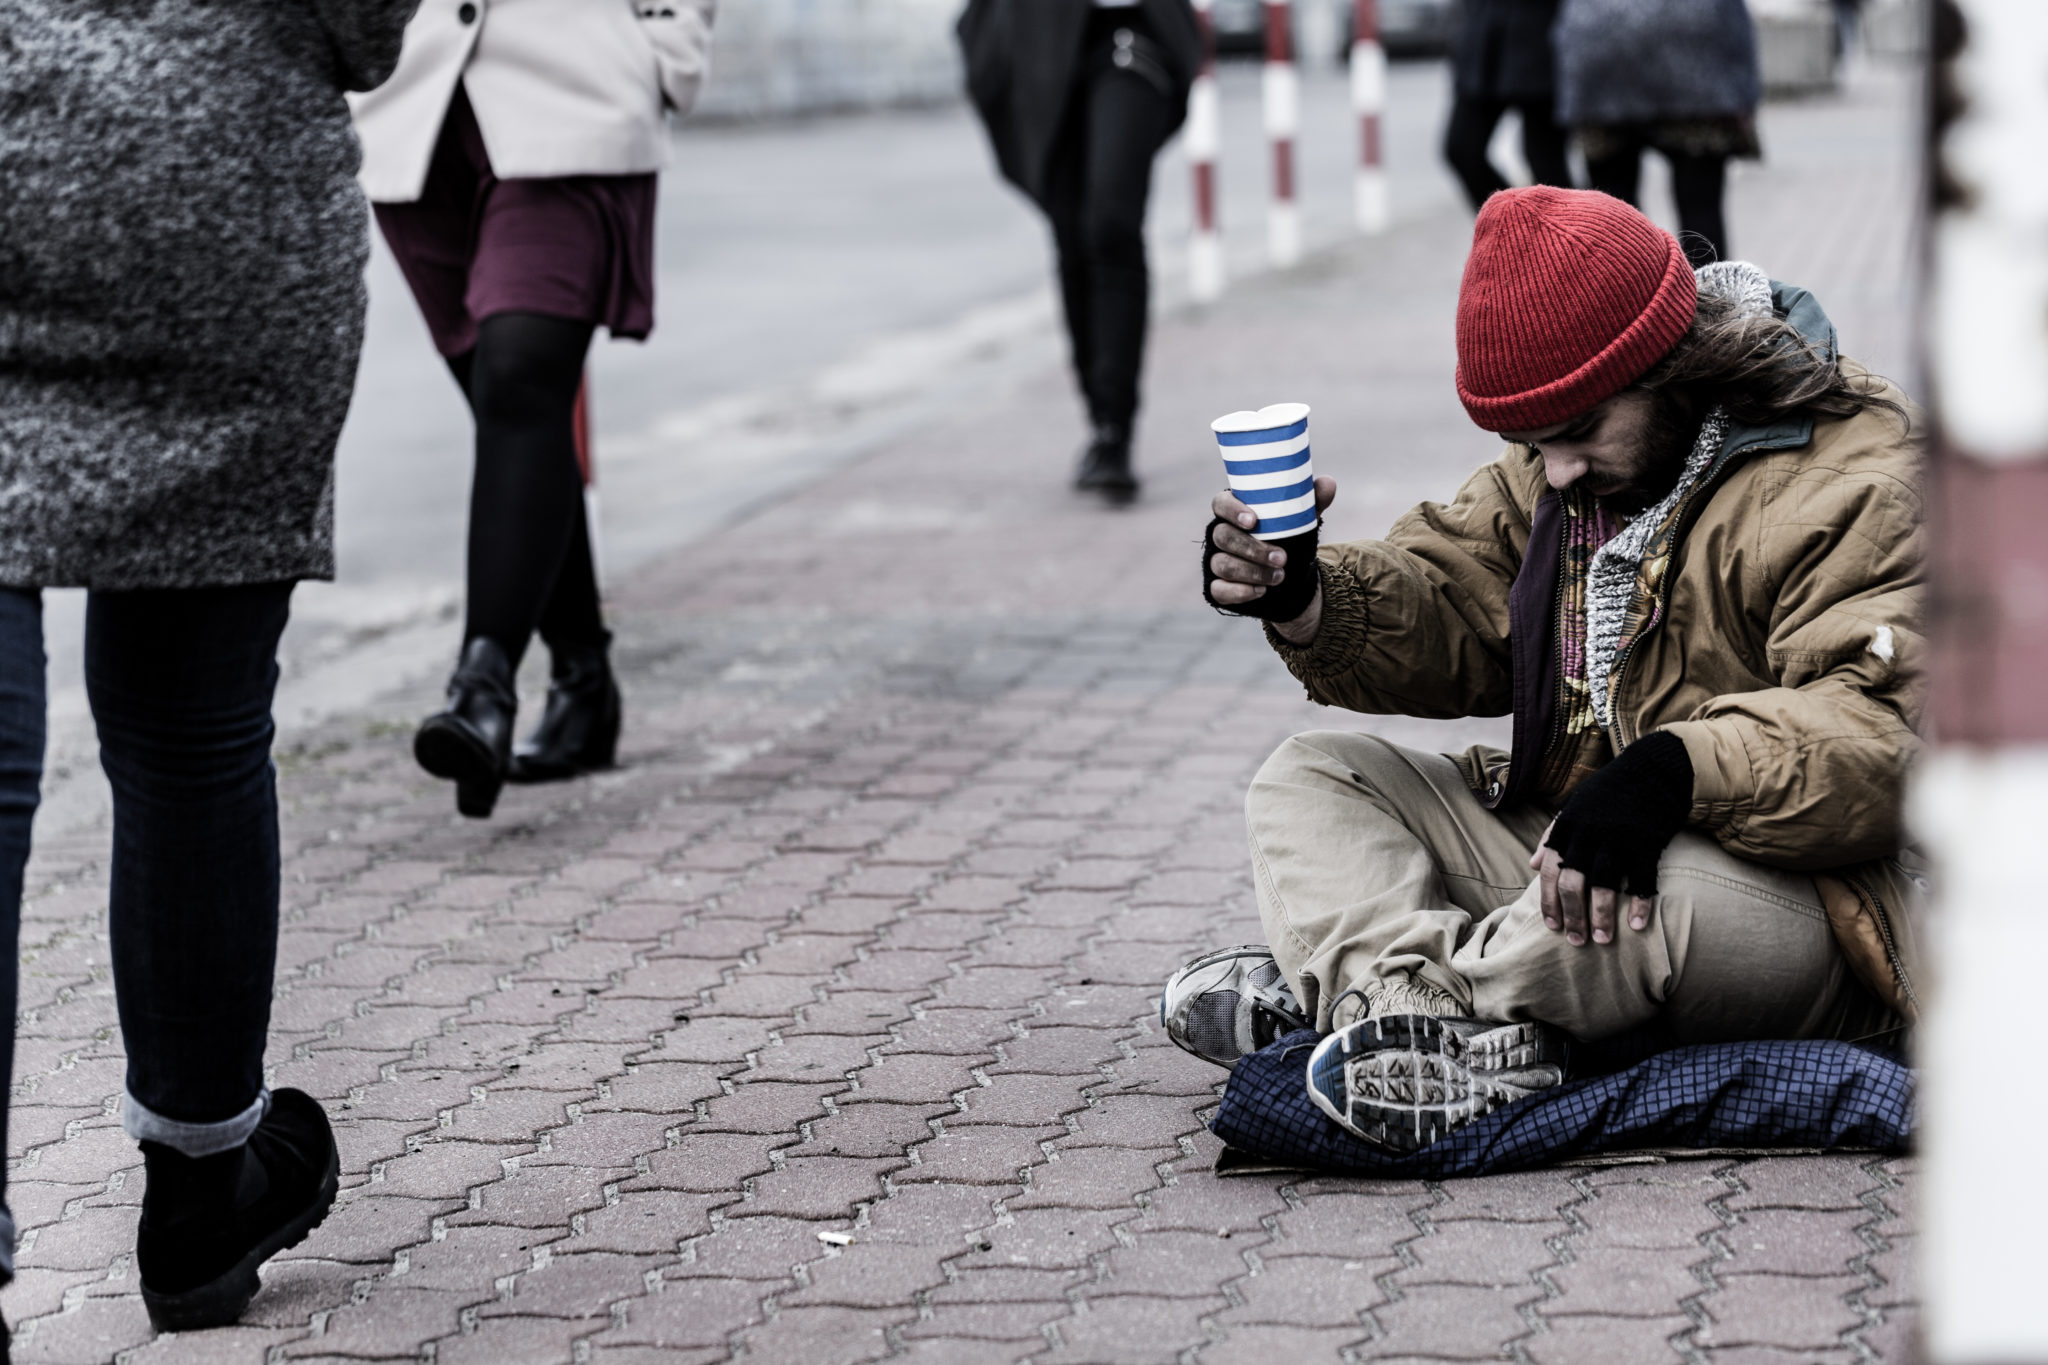 Hopeless beggar asking for food while sitting on the sidewalk between pedestrians